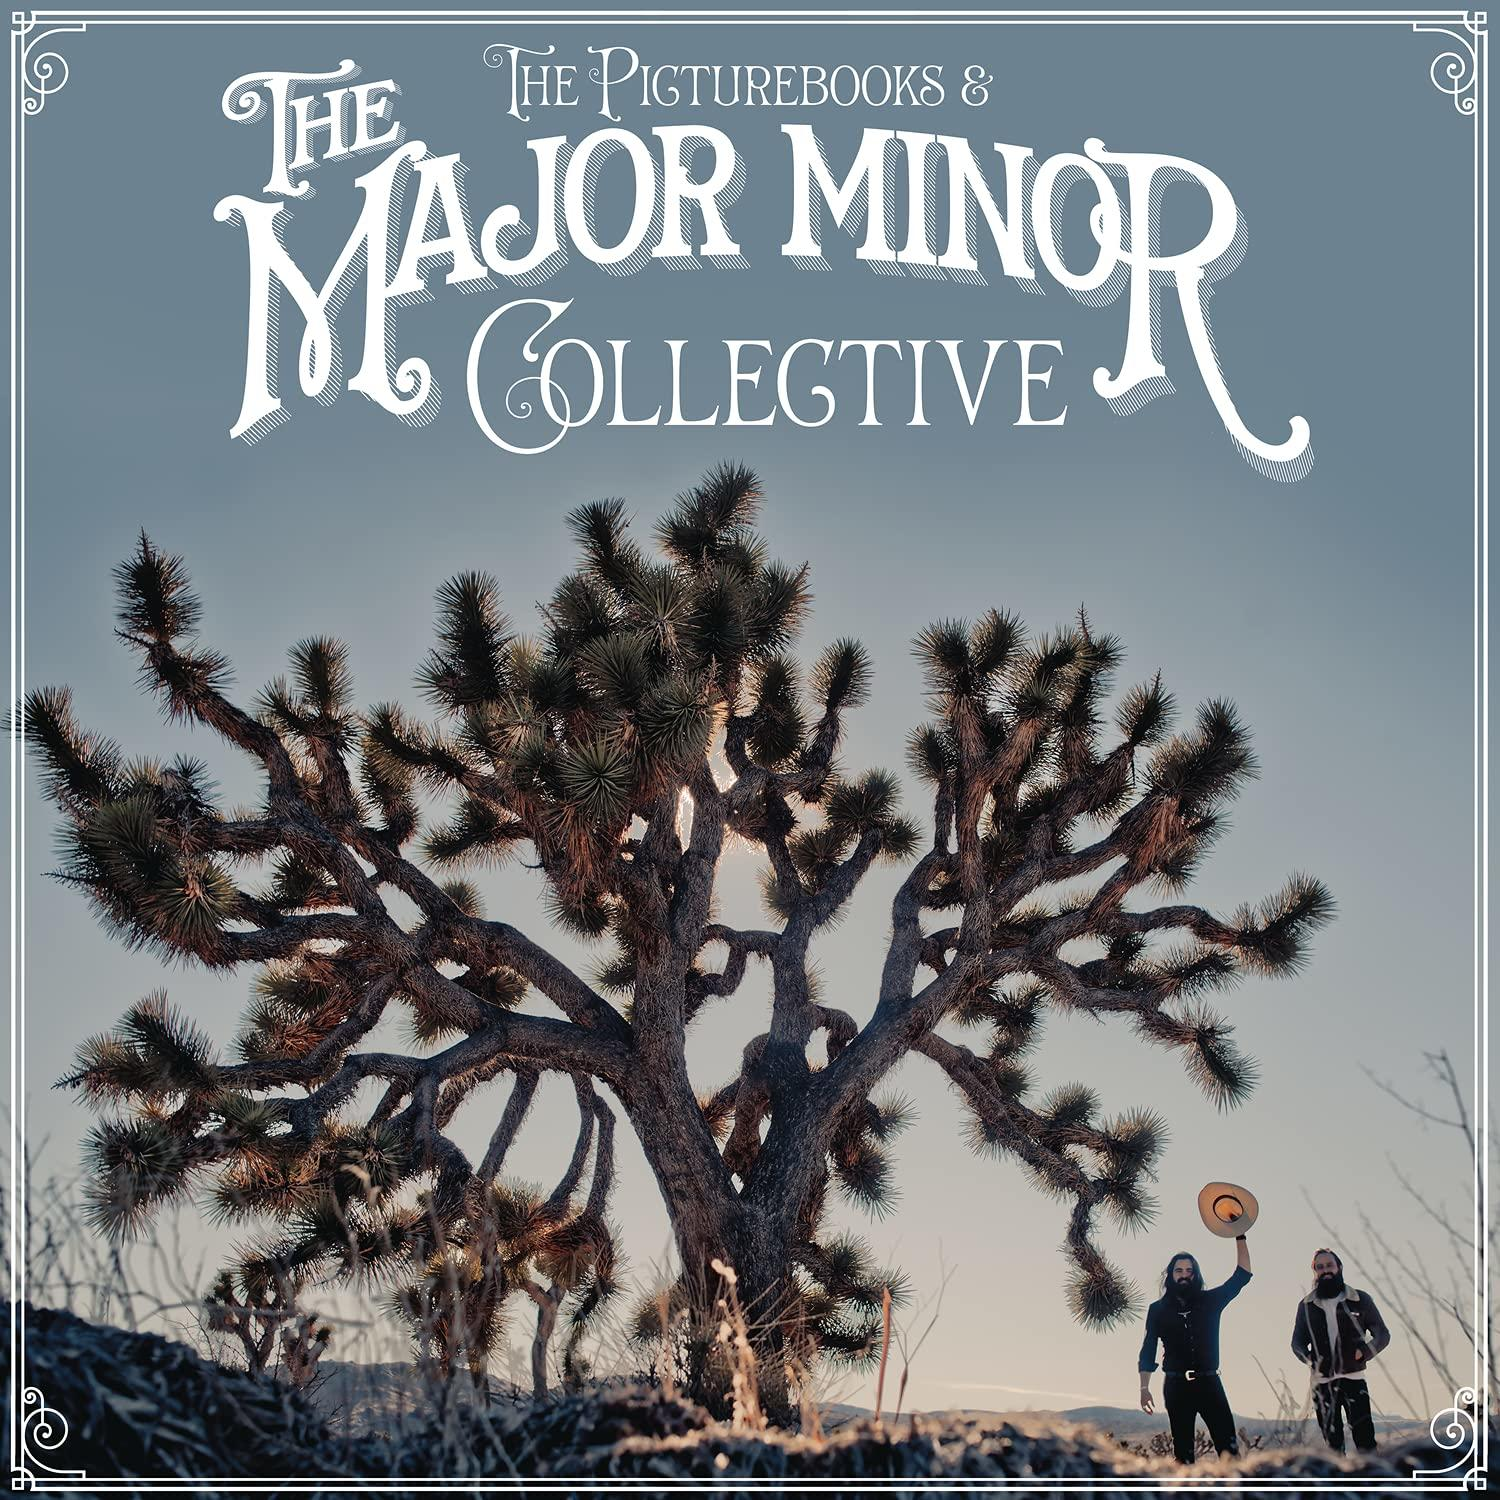 COLLECTIVE - Picturebooks (CD) - MAJOR MINOR THE The